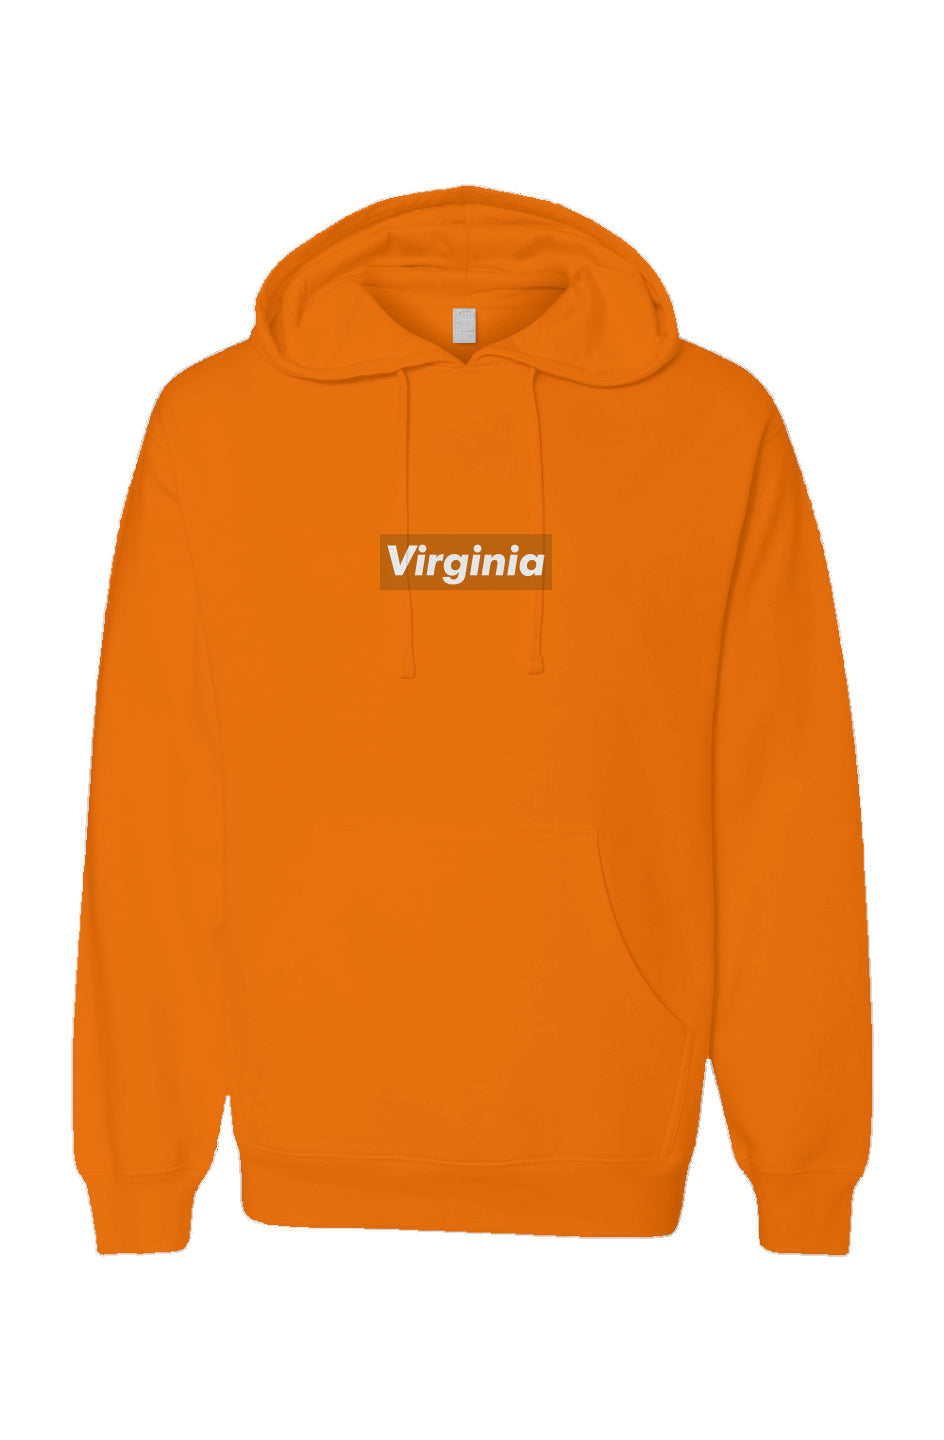 Virginia Box Logo Hoodie - Orange/Orange